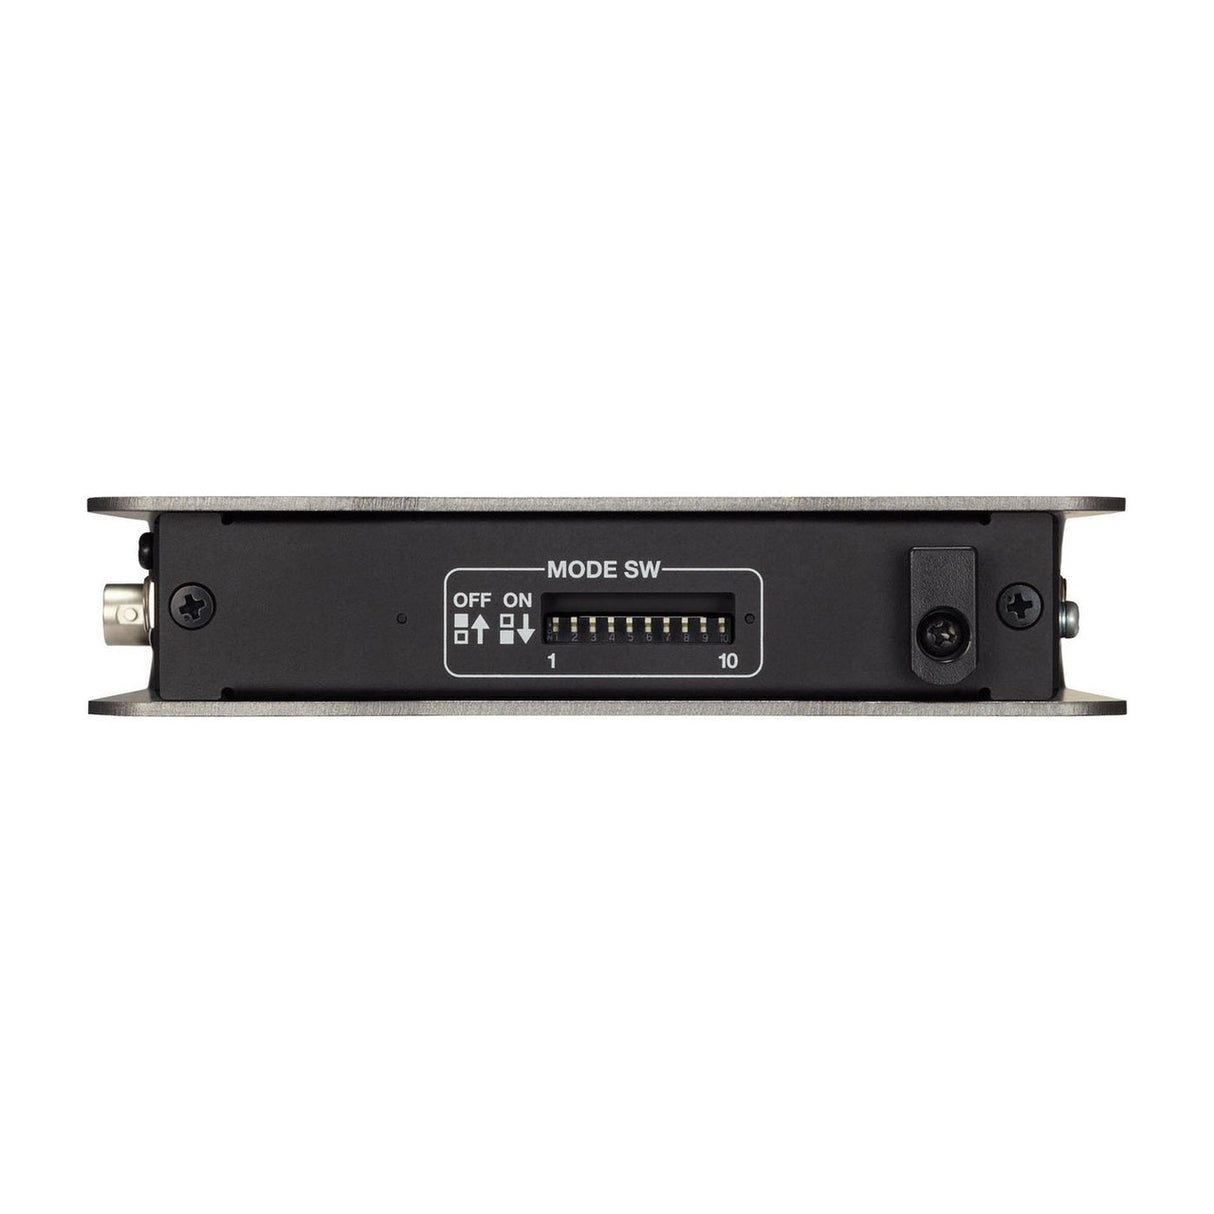 Roland VC1SH SDI to HDMI Video Converter